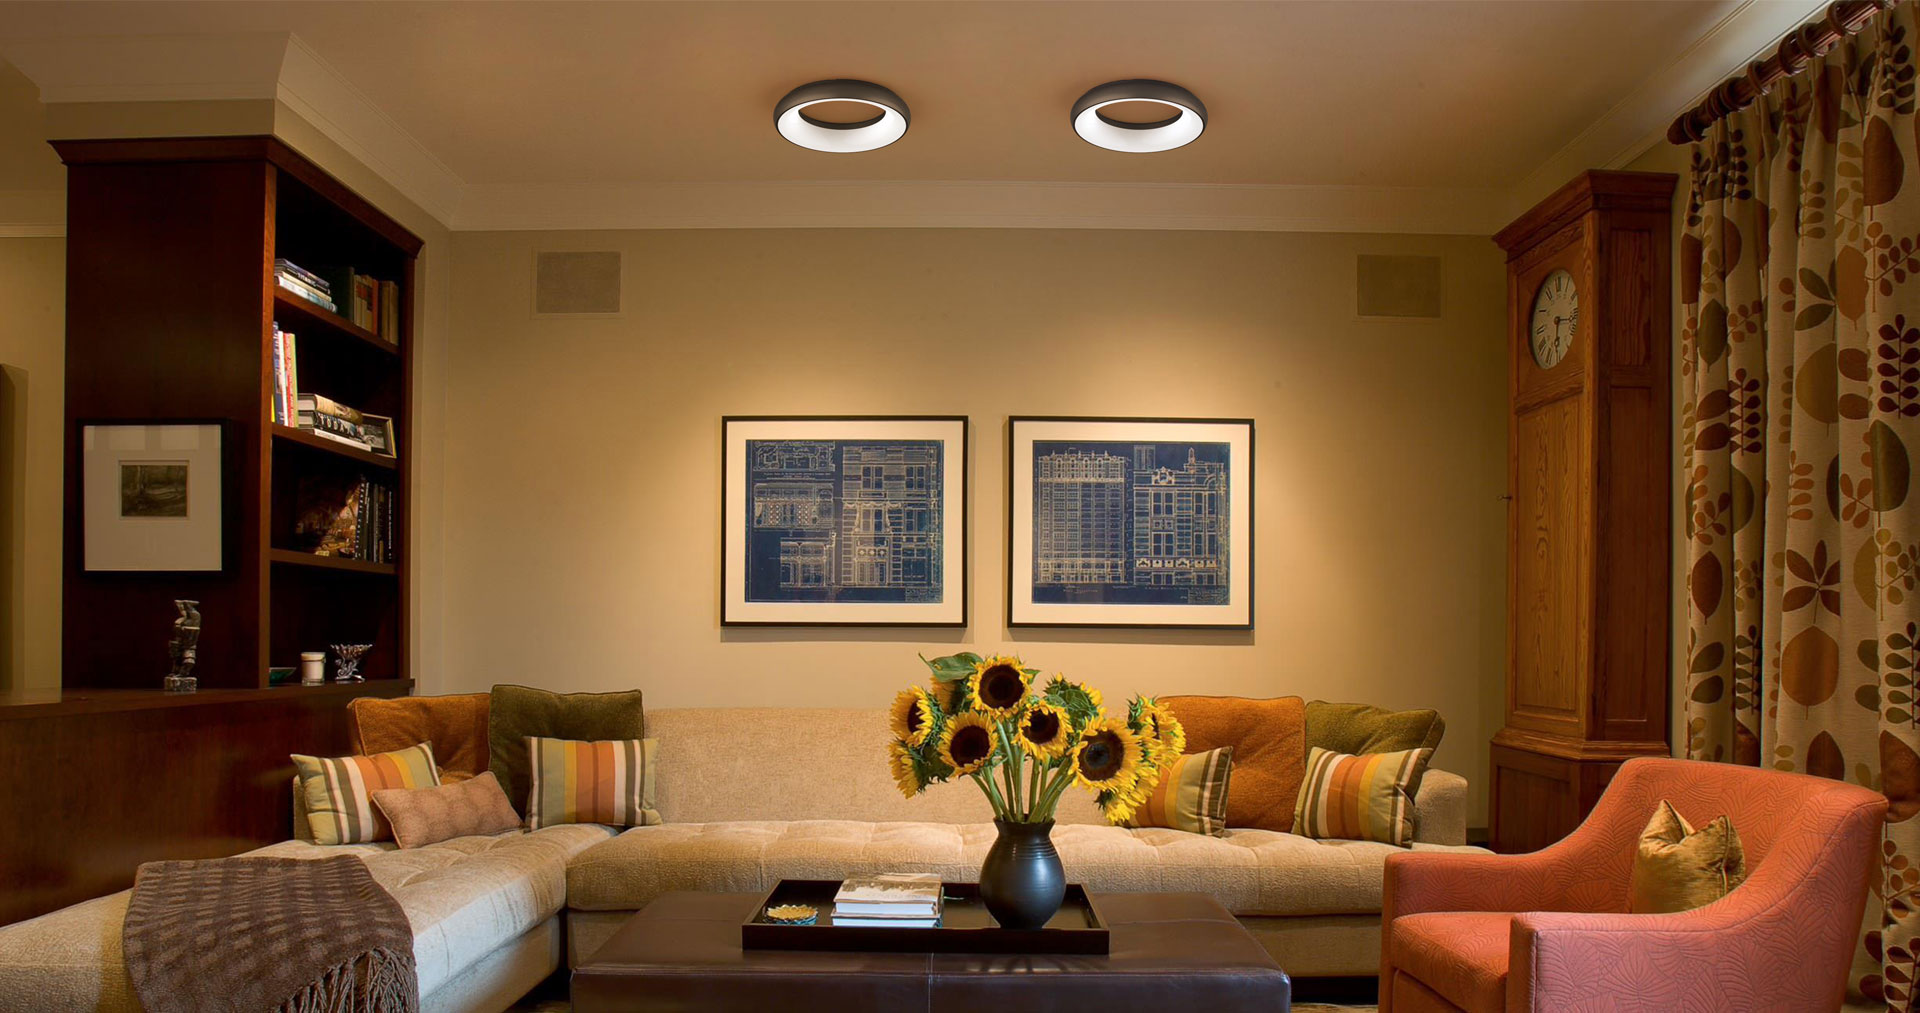 Plug In Ceiling Light For Living Room